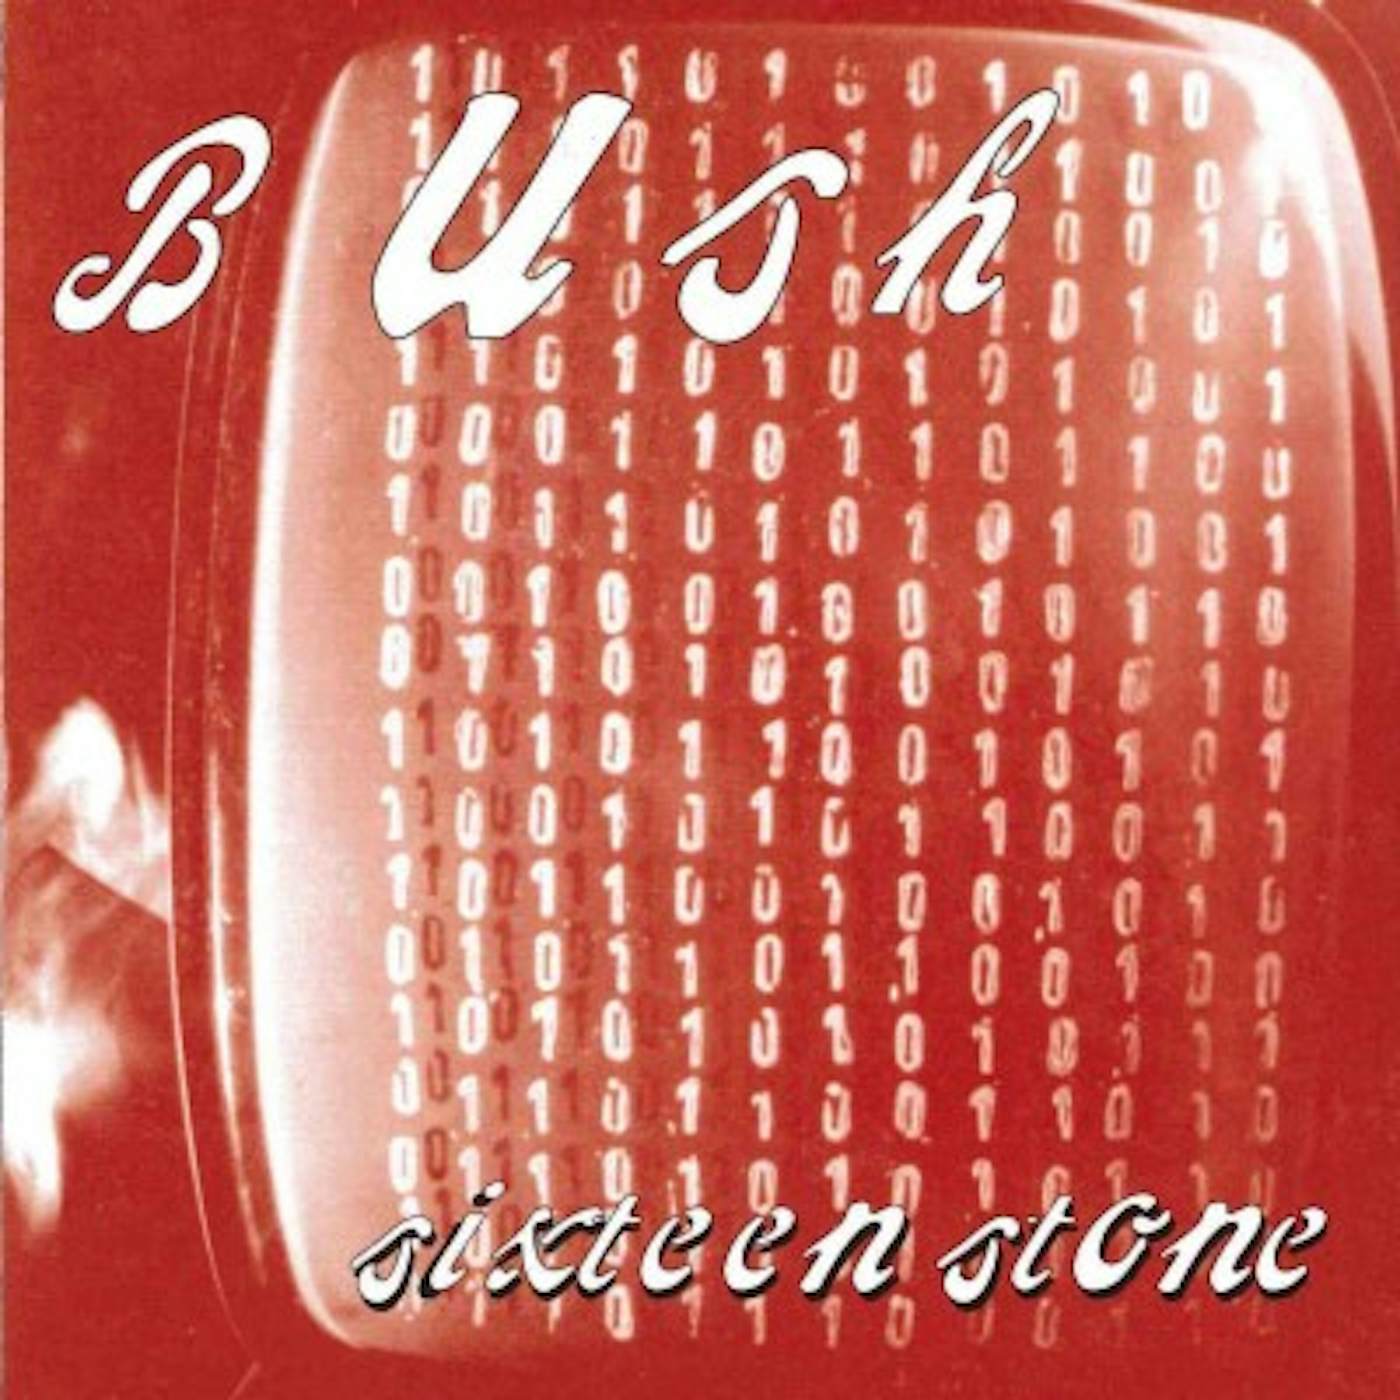 Bush SIXTEEN STONE CD